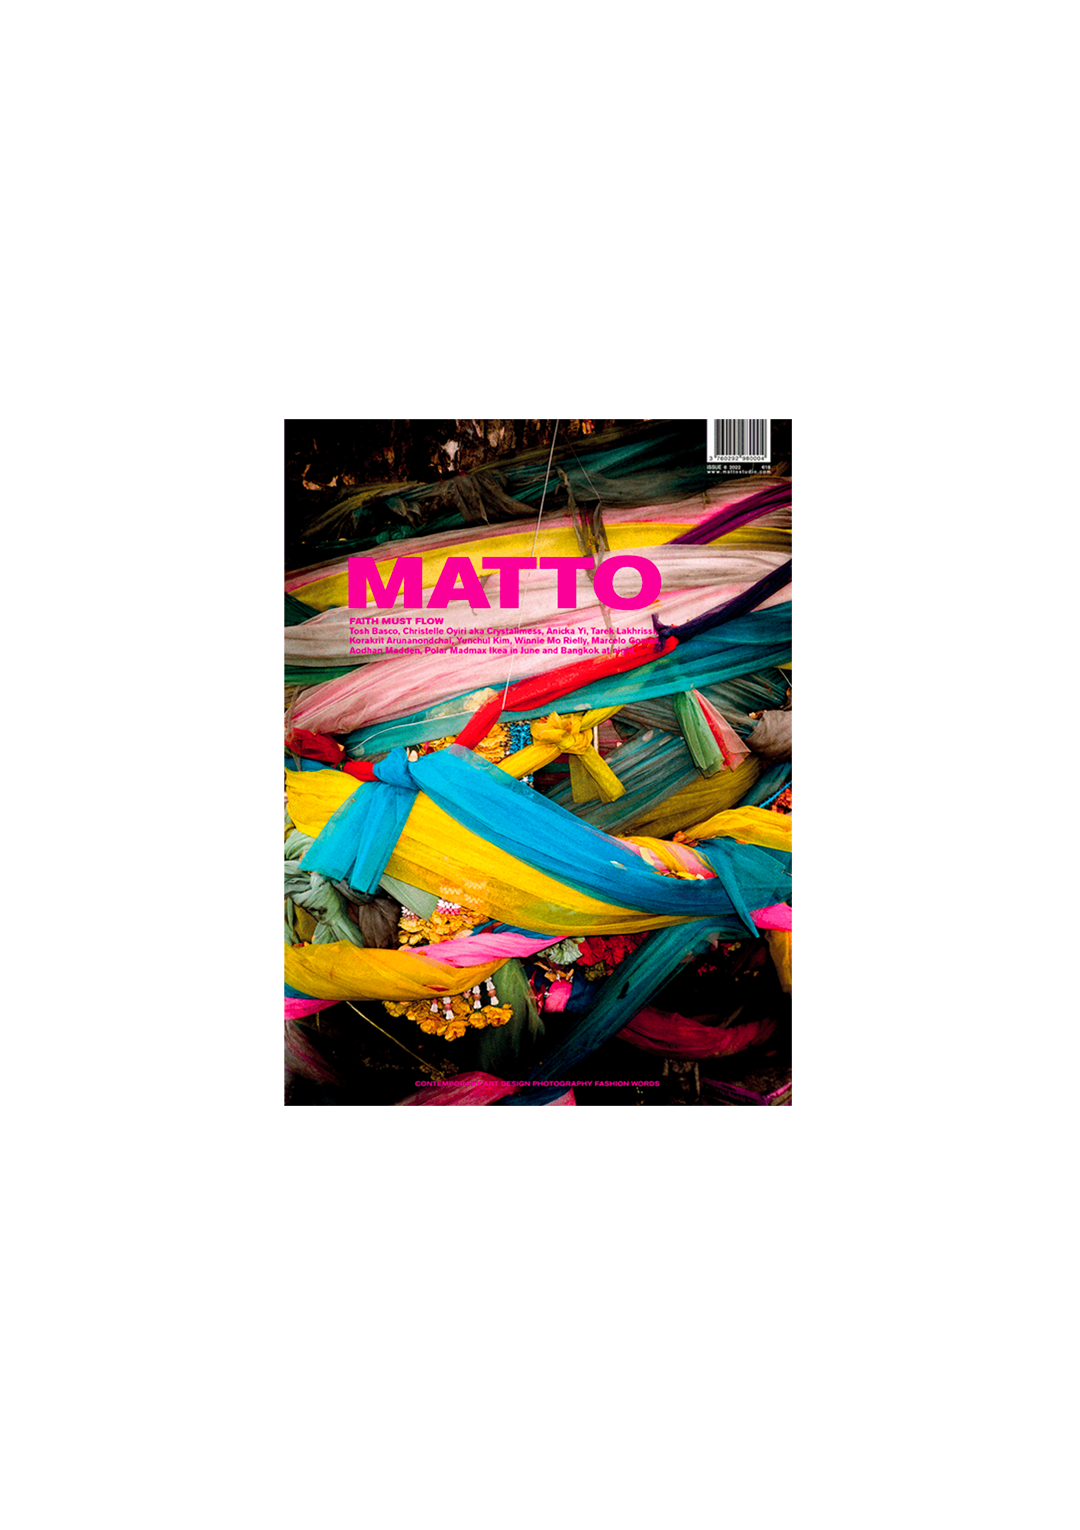 MATTO Magazine Issue 6 faith must flow